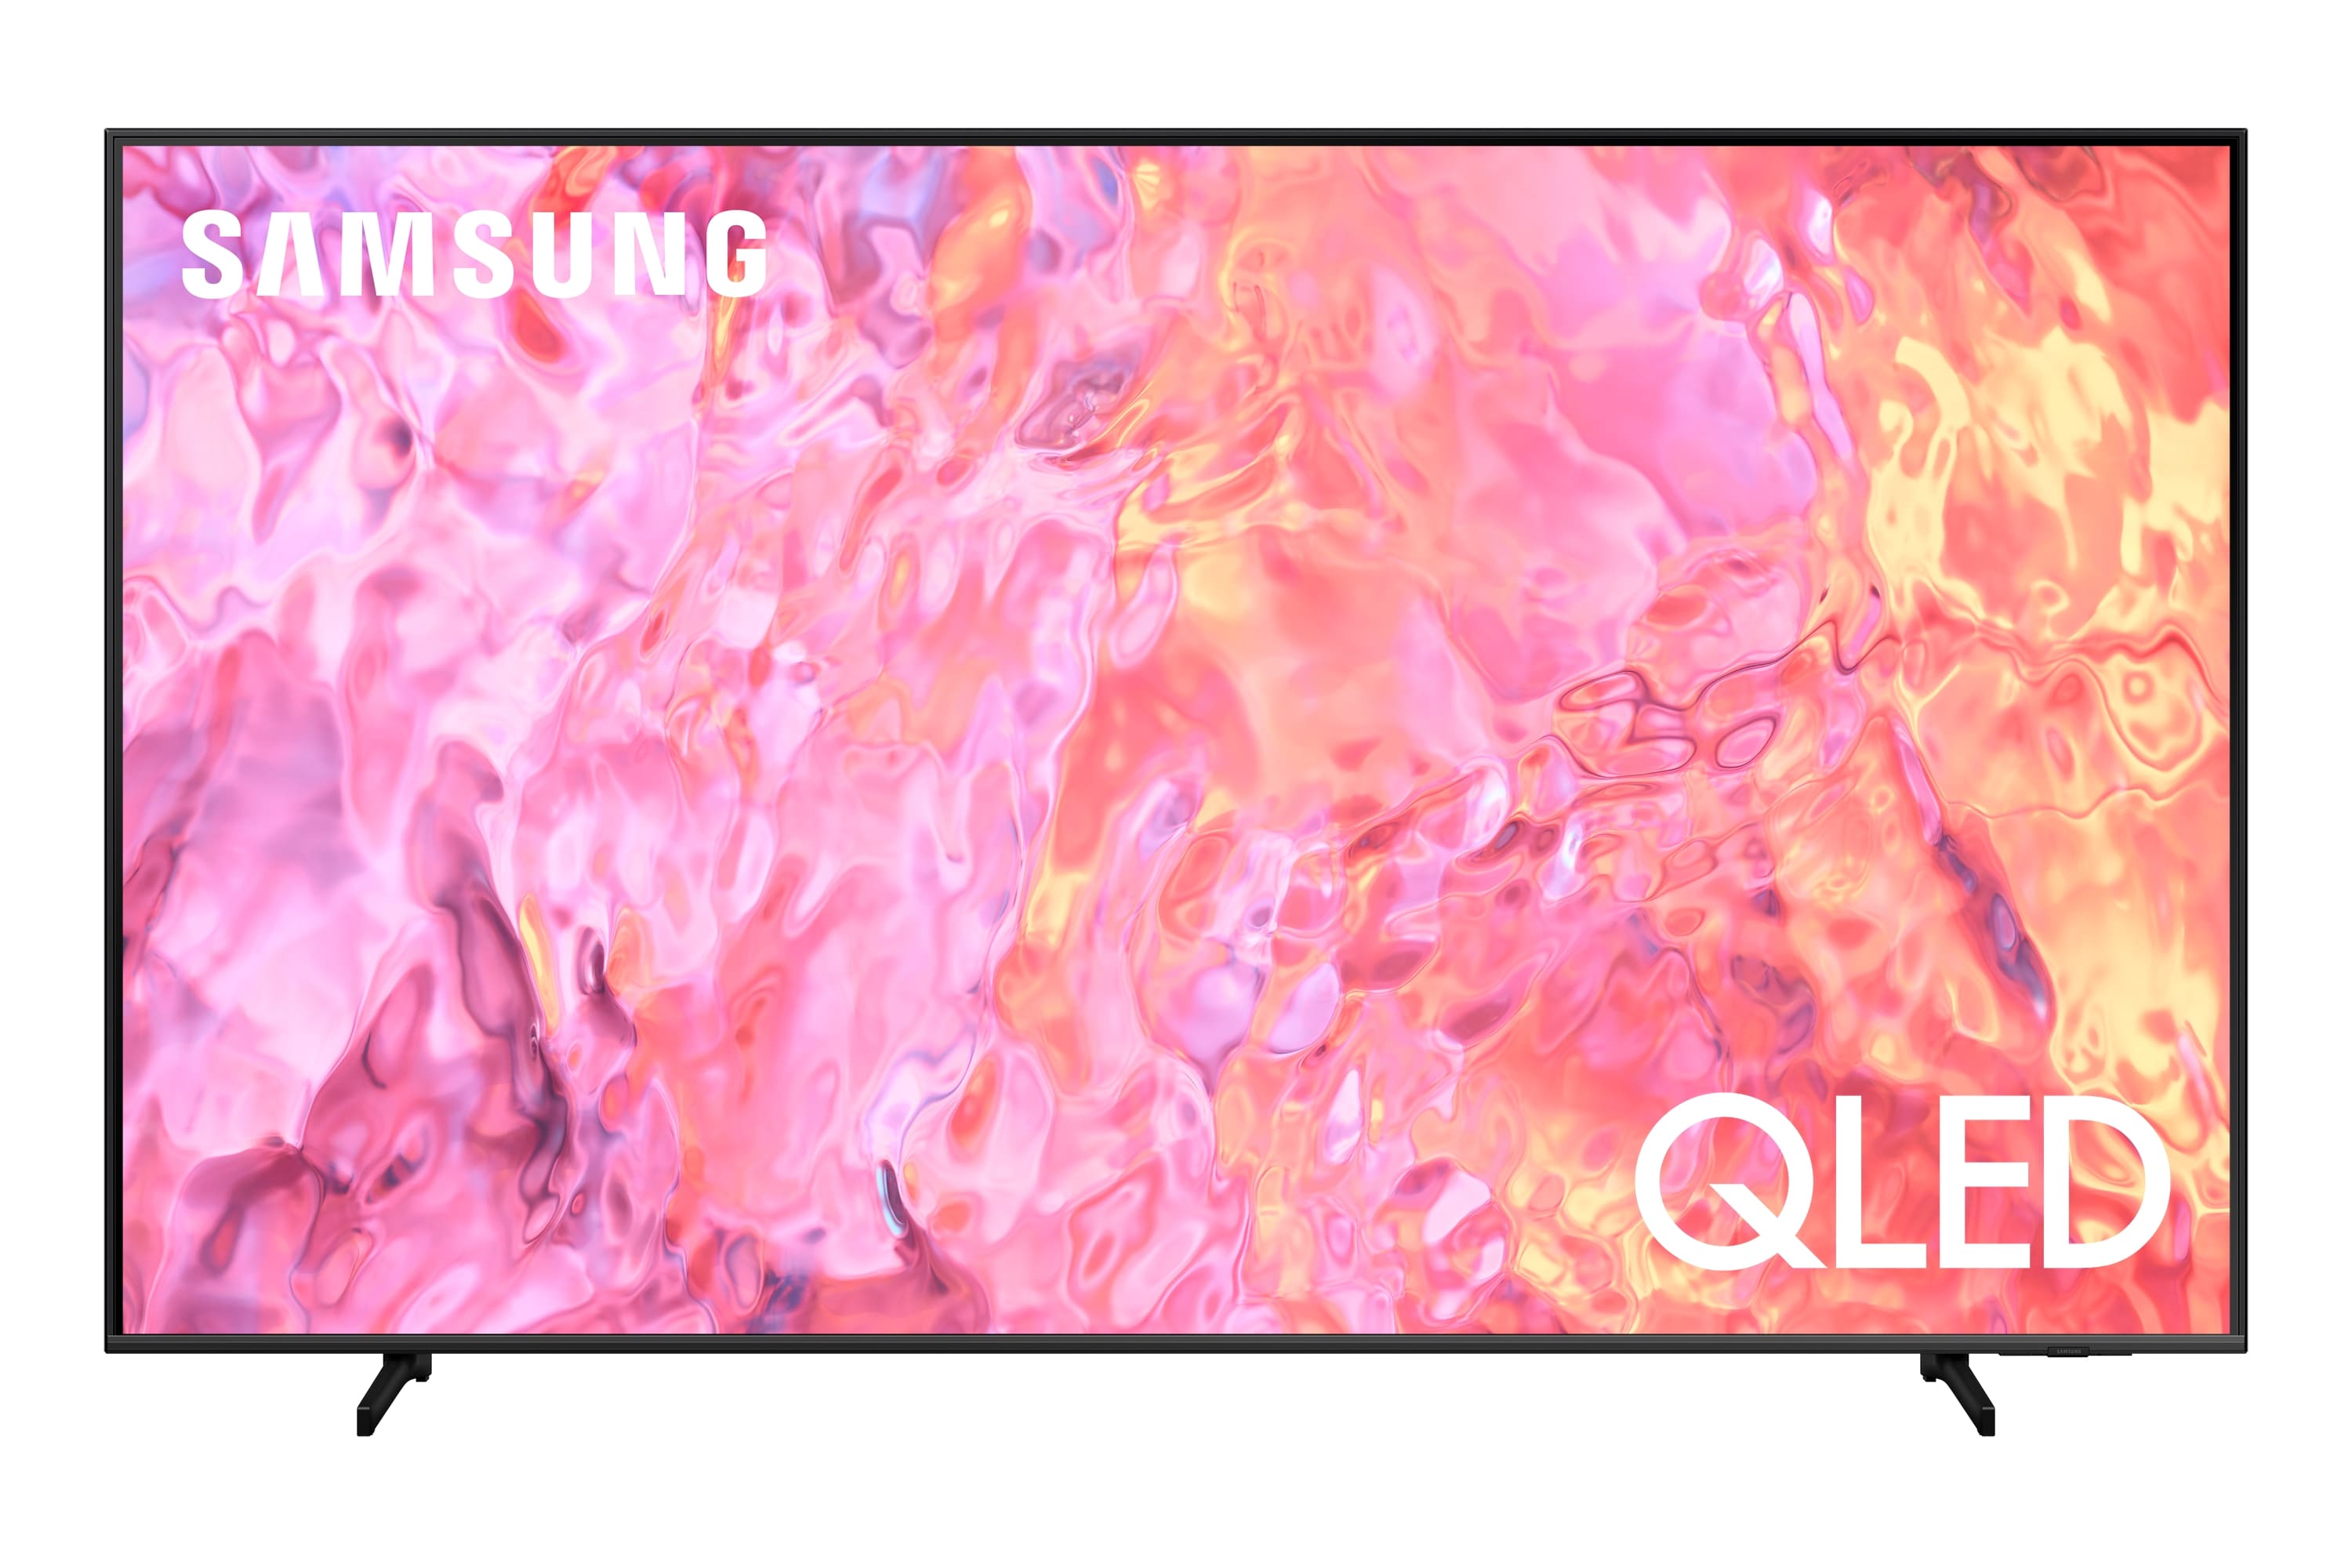 Samsung QLED TV 65"